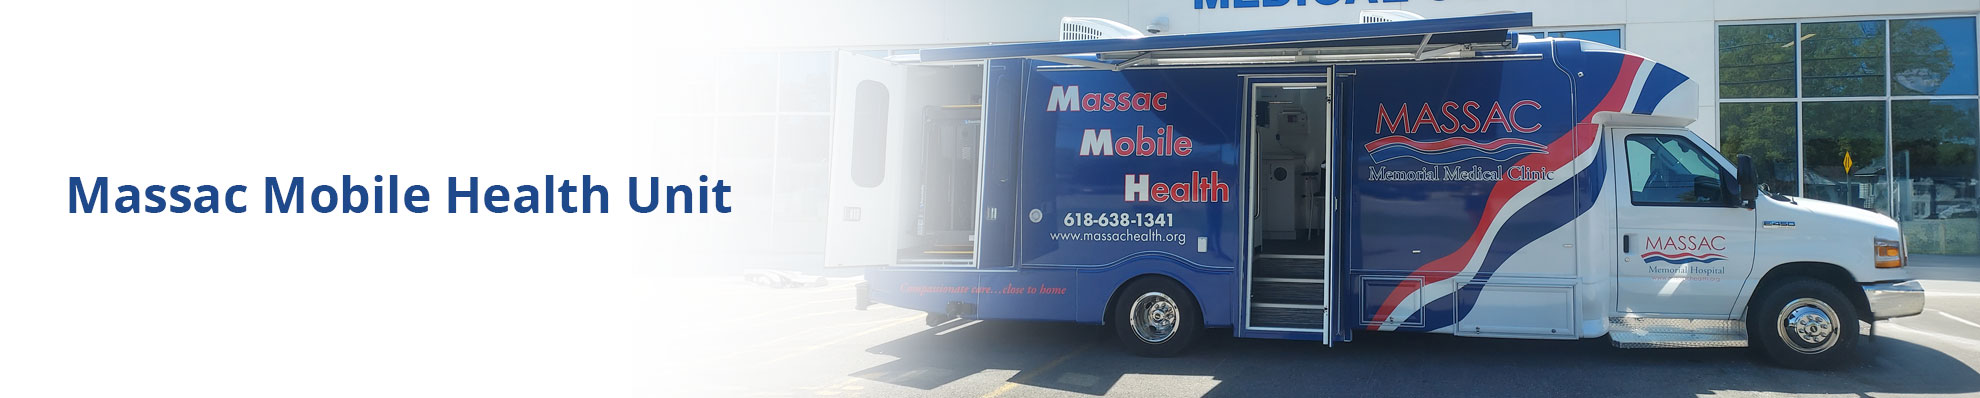 Massac Mobile Health Unit